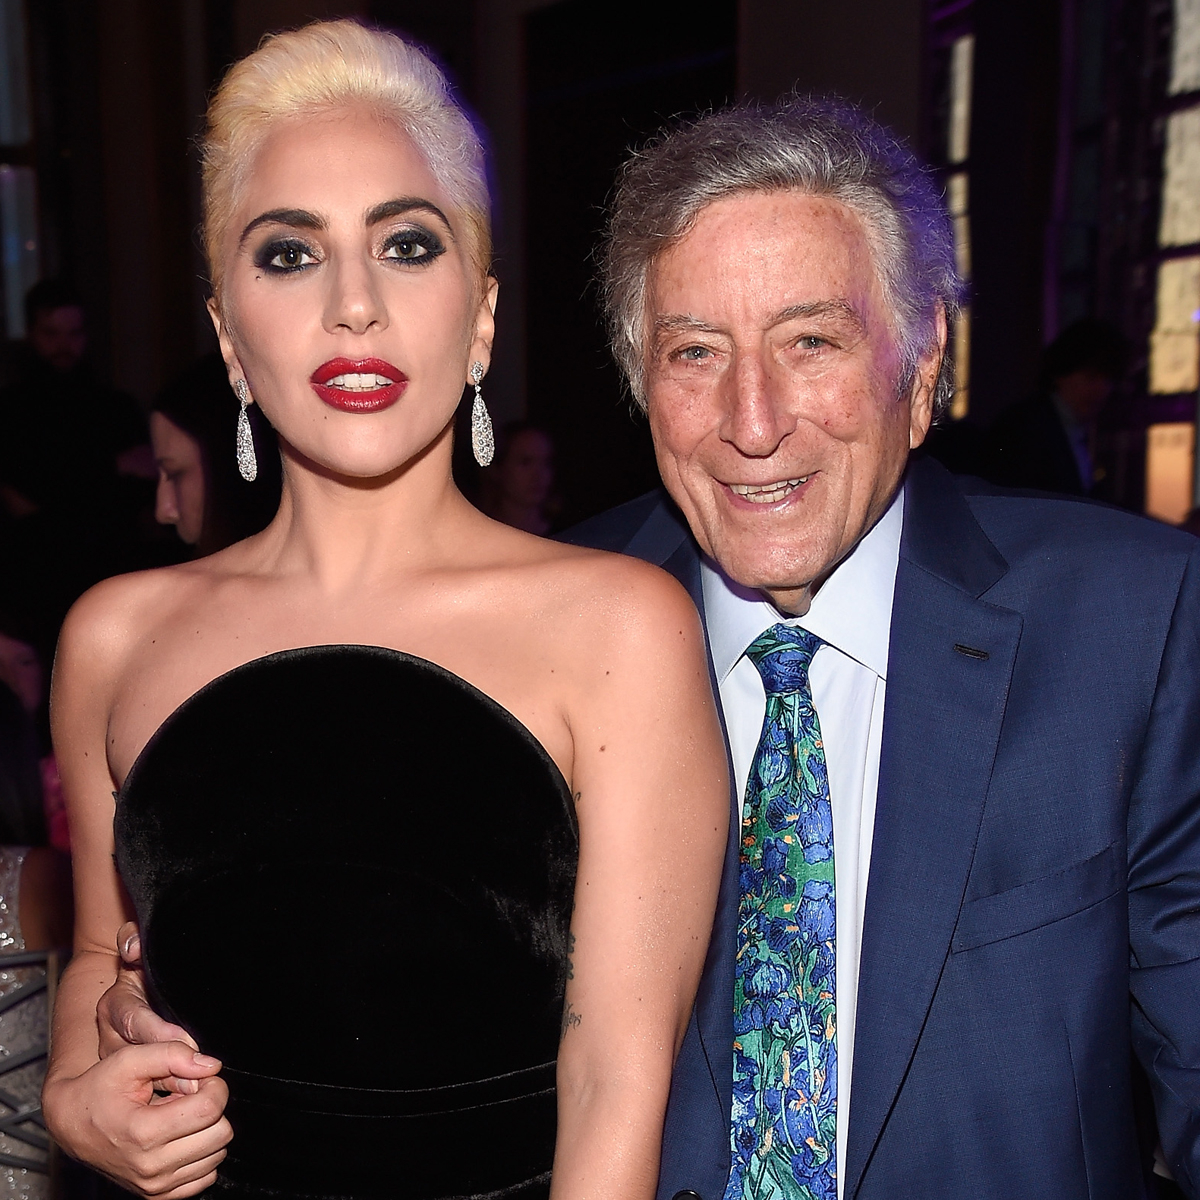 Lady Gaga Mourns Death of Beloved Collaborator Tony Bennett